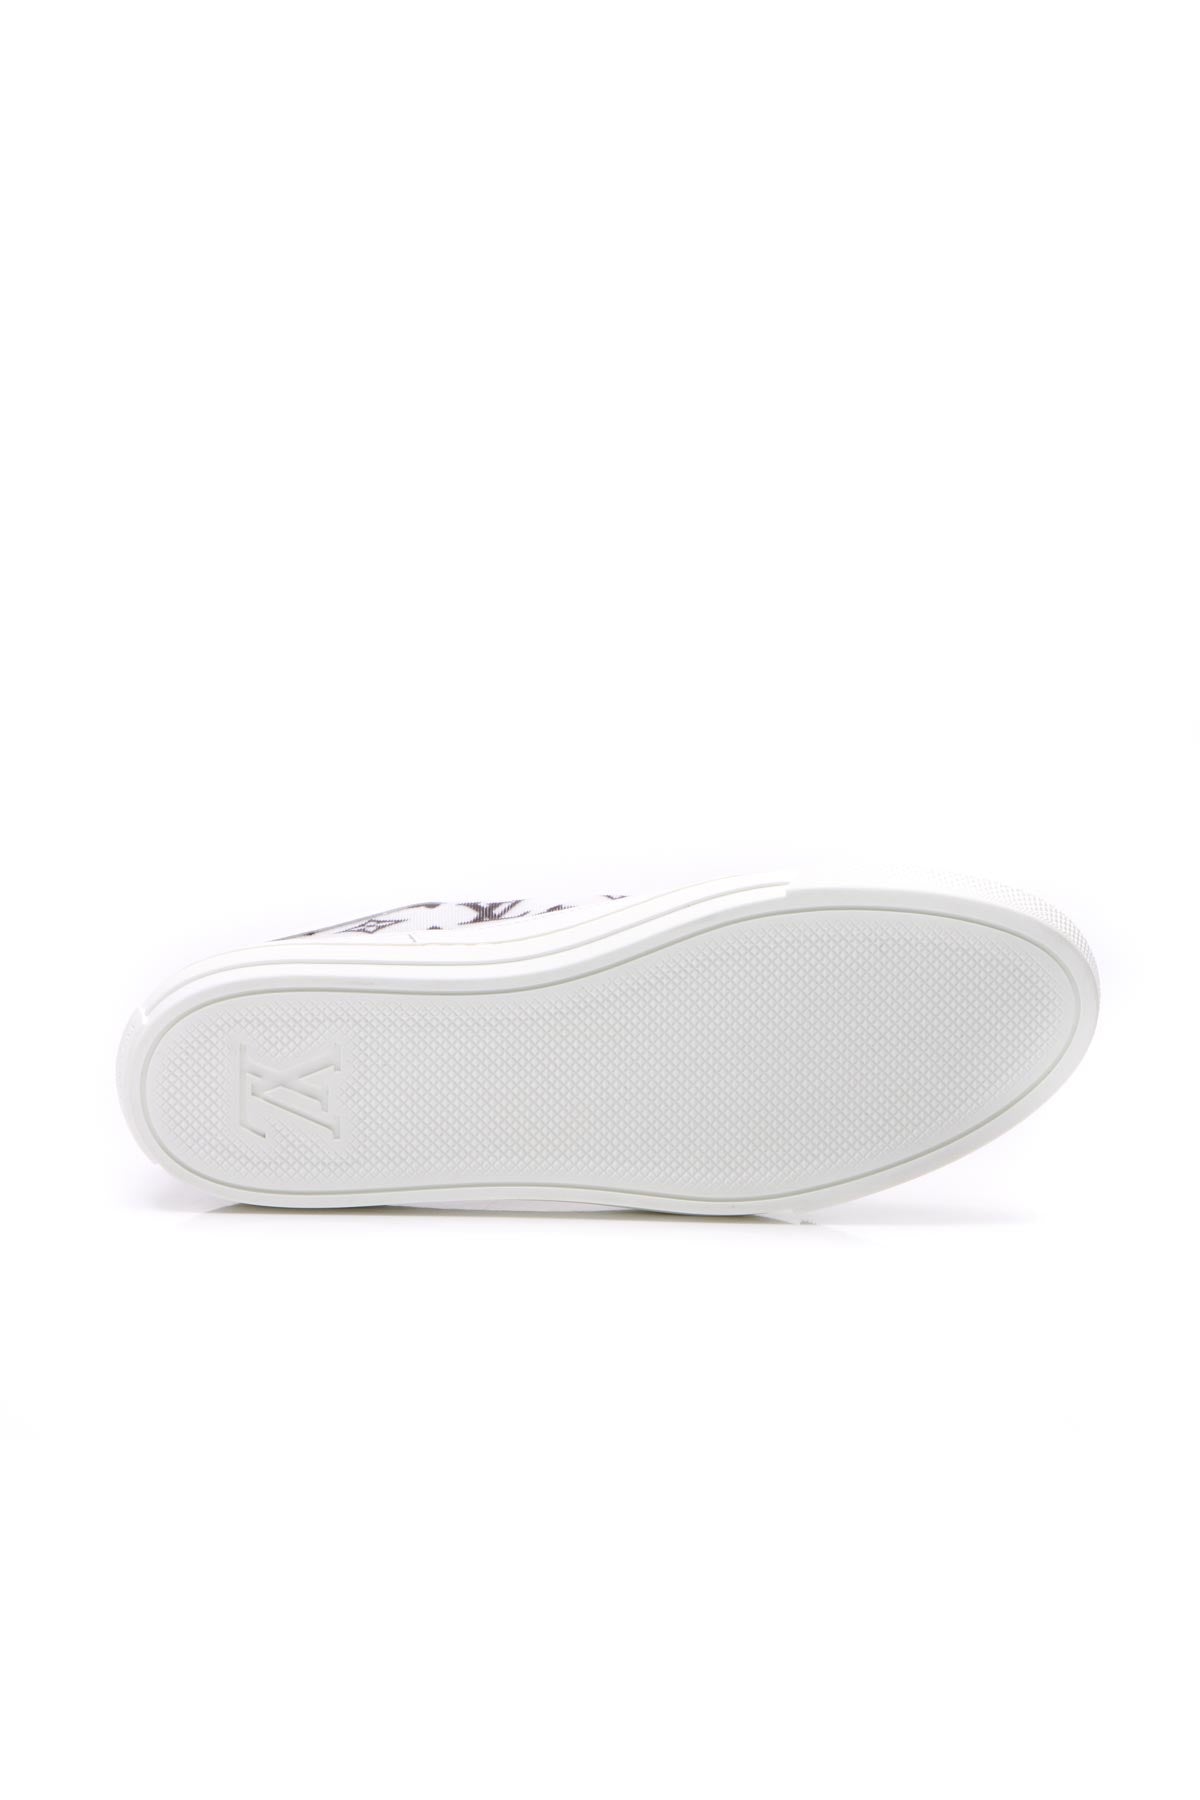 LOUIS VUITTON white and black 2020 Monogram Mesh STELLAR Low Top Sneakers  Shoes 38